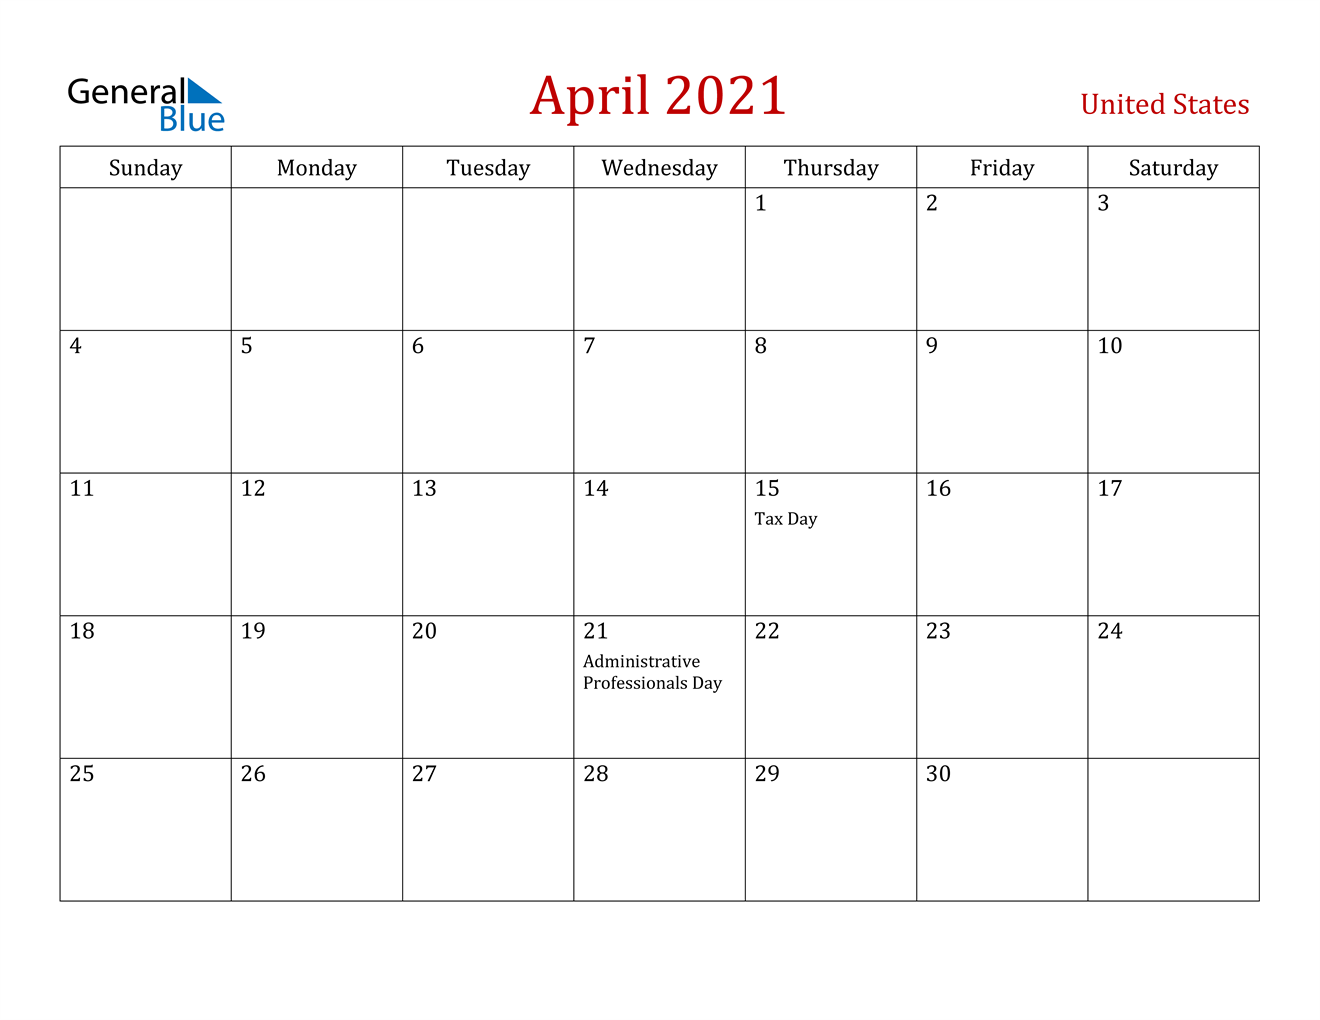 April 2021 Calendar - United States